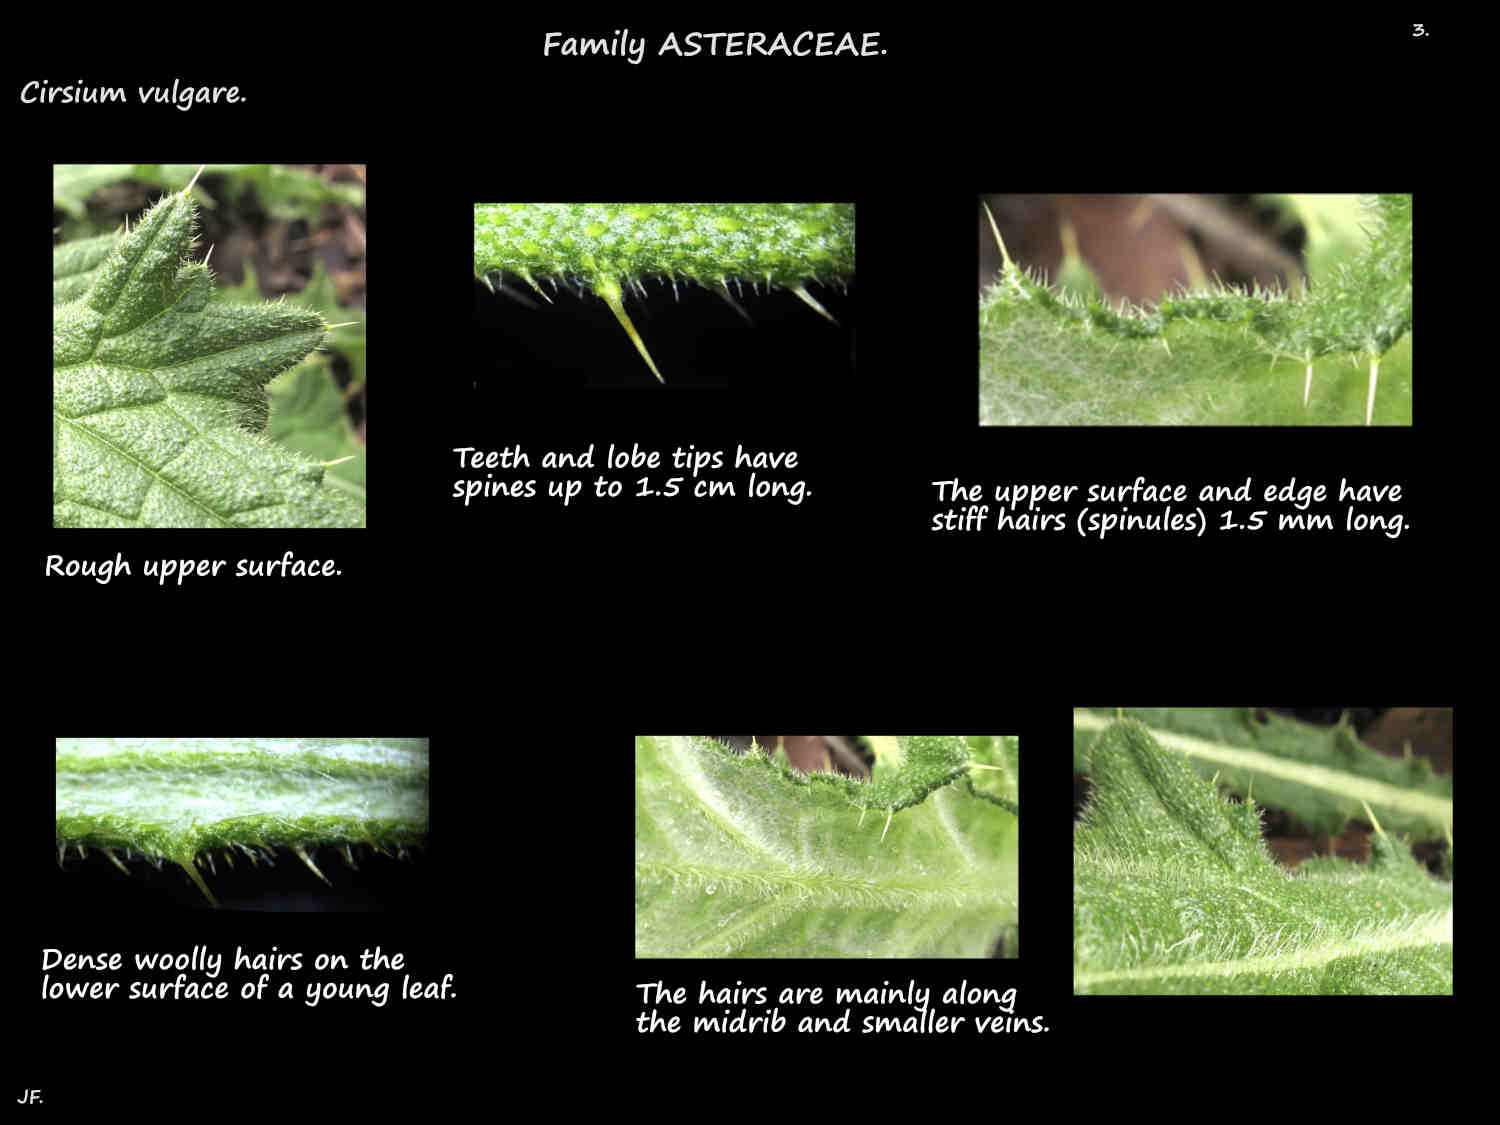 3 Cirsium vulgare leaf hairs, spines & spinules